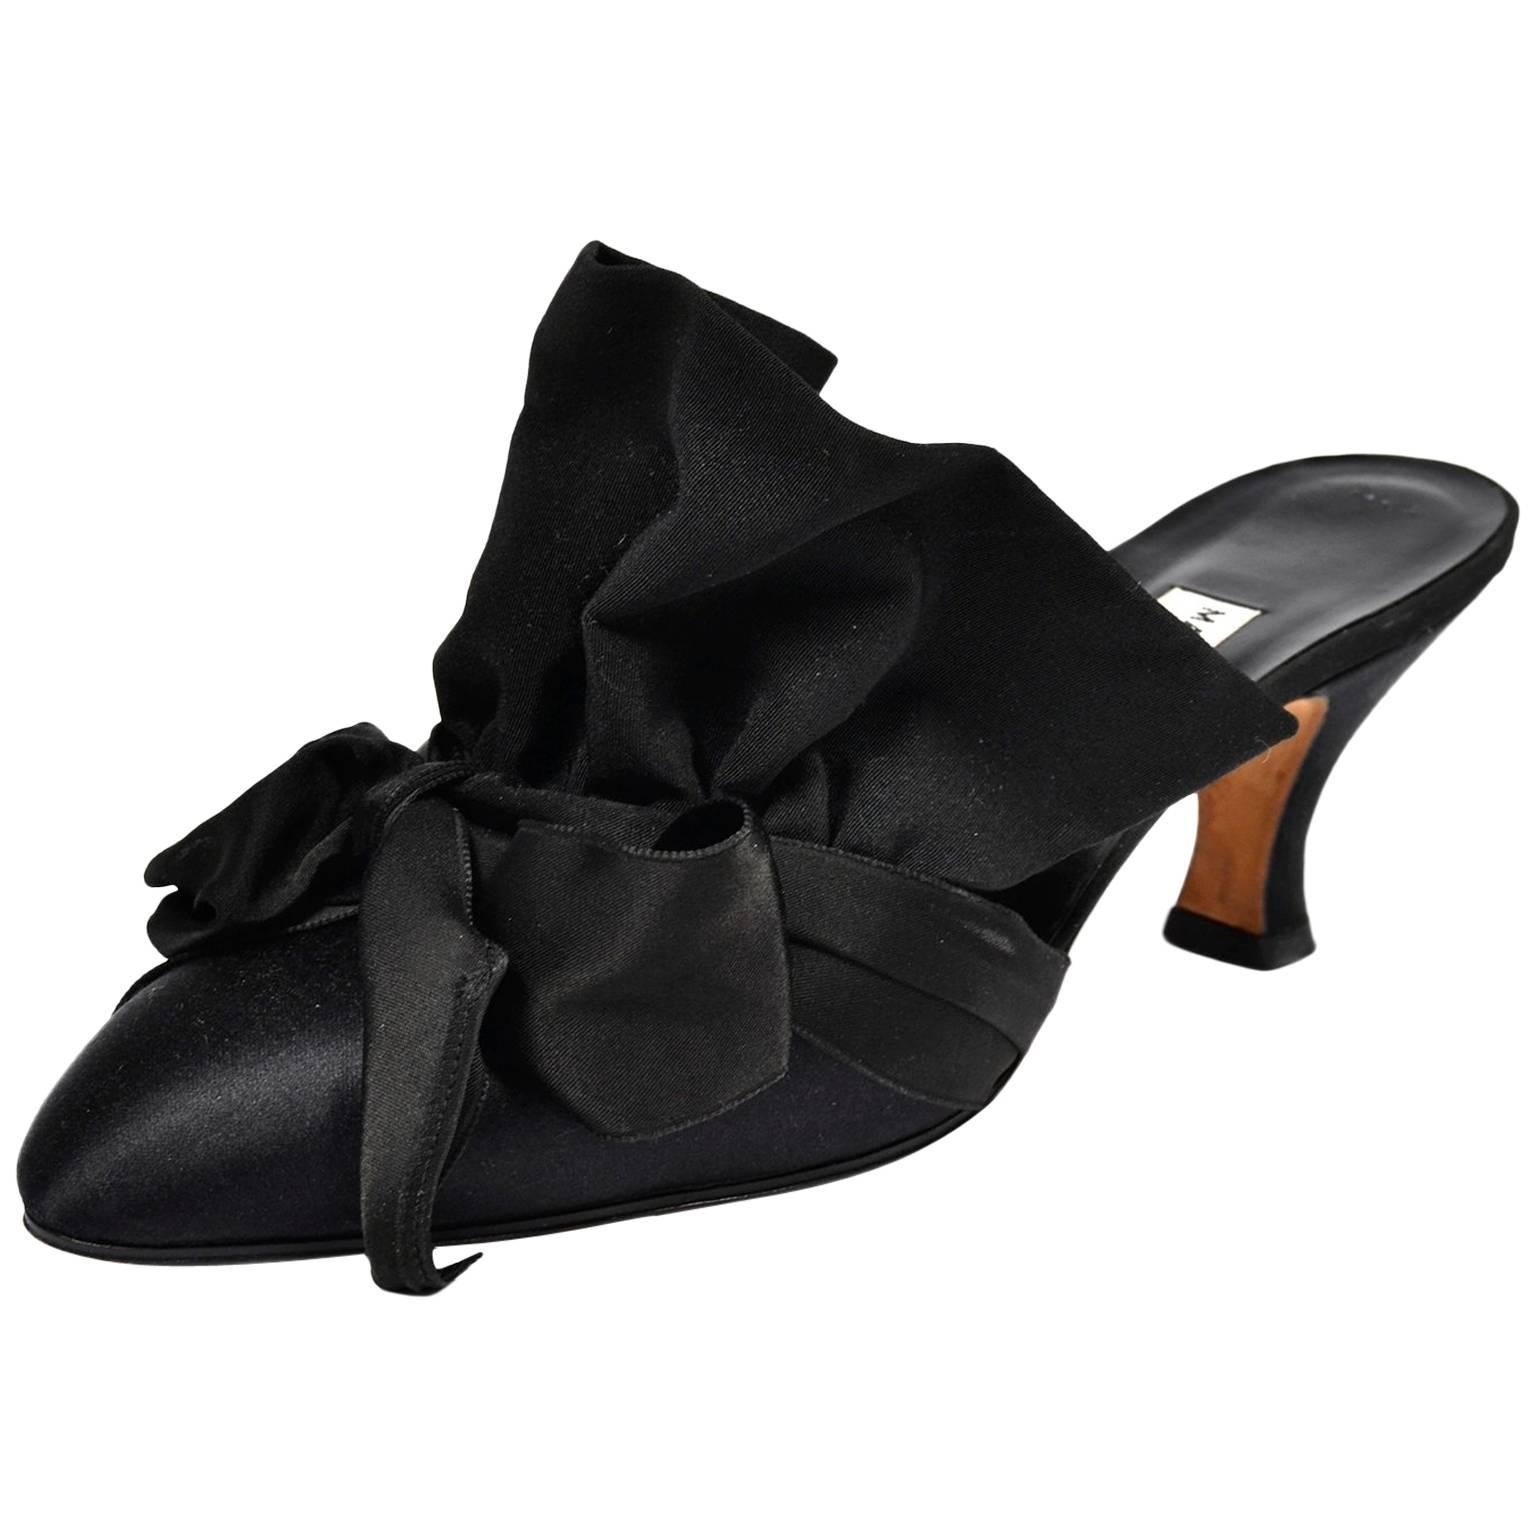  Rare Vintage Manolo Blahnik Black Ruffled Satin Bow Shoes Mules Size 39.5